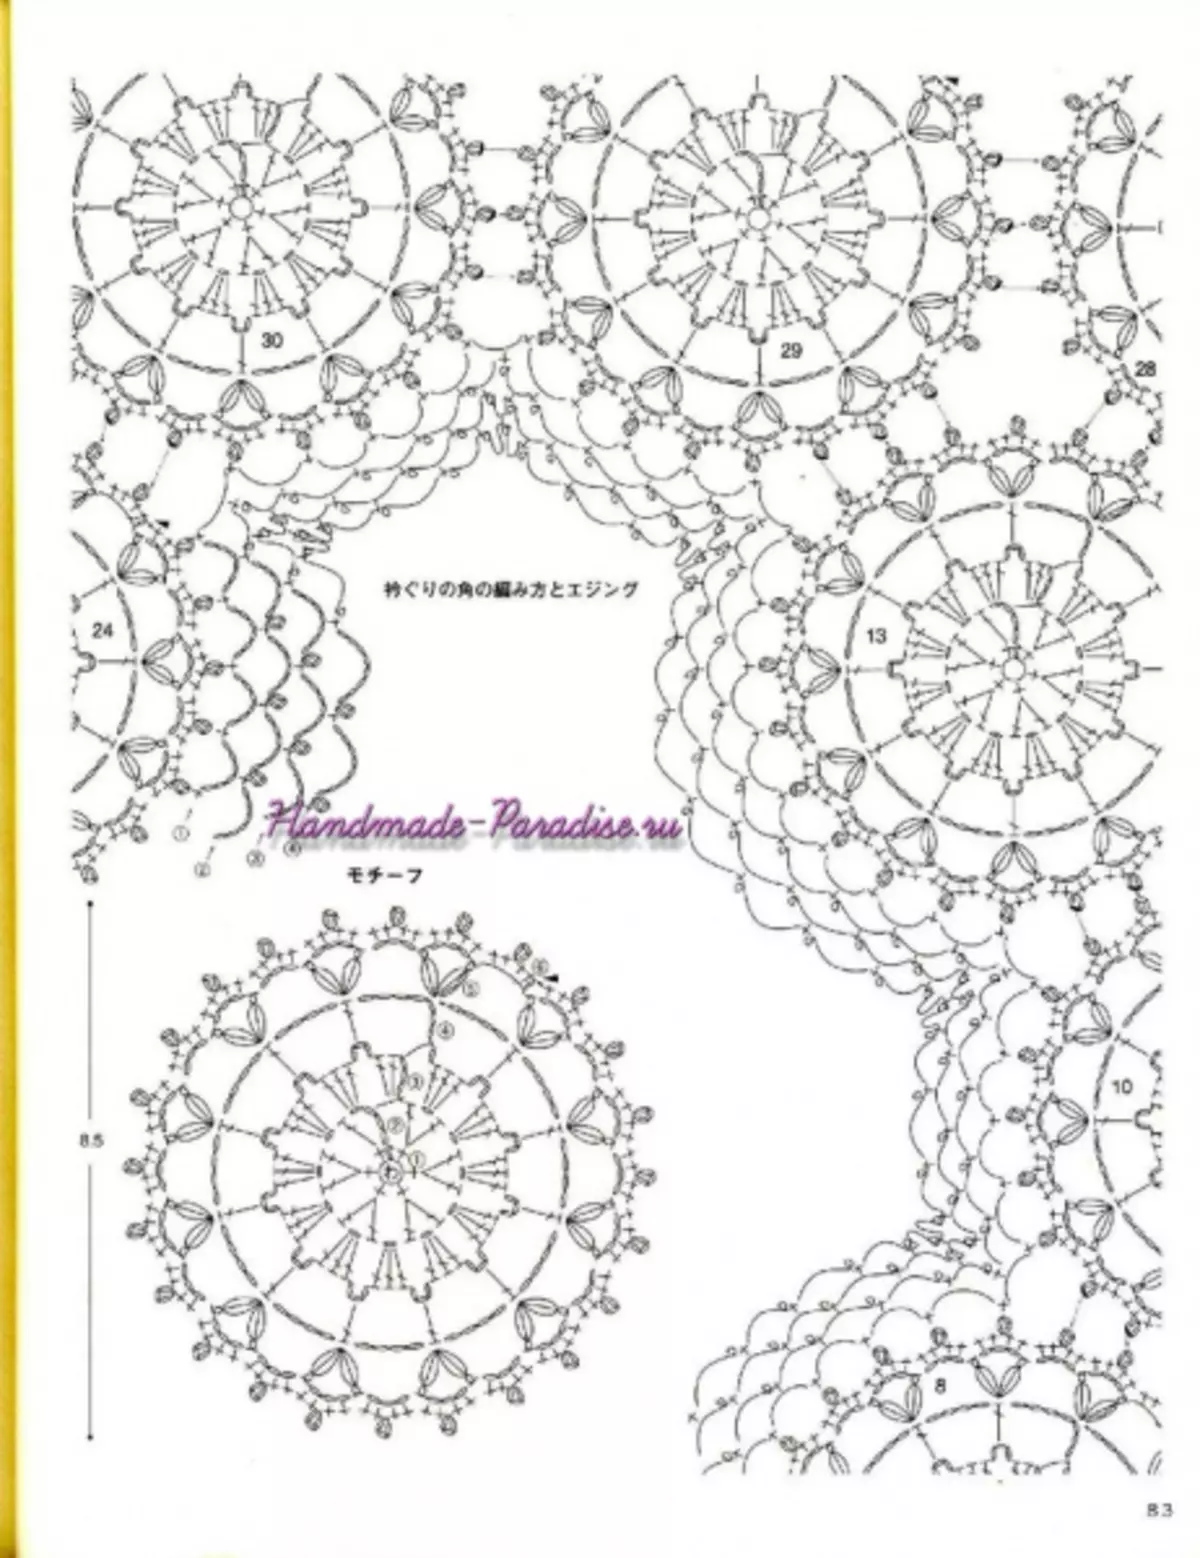 Crochet decoratiu. Revista japonesa